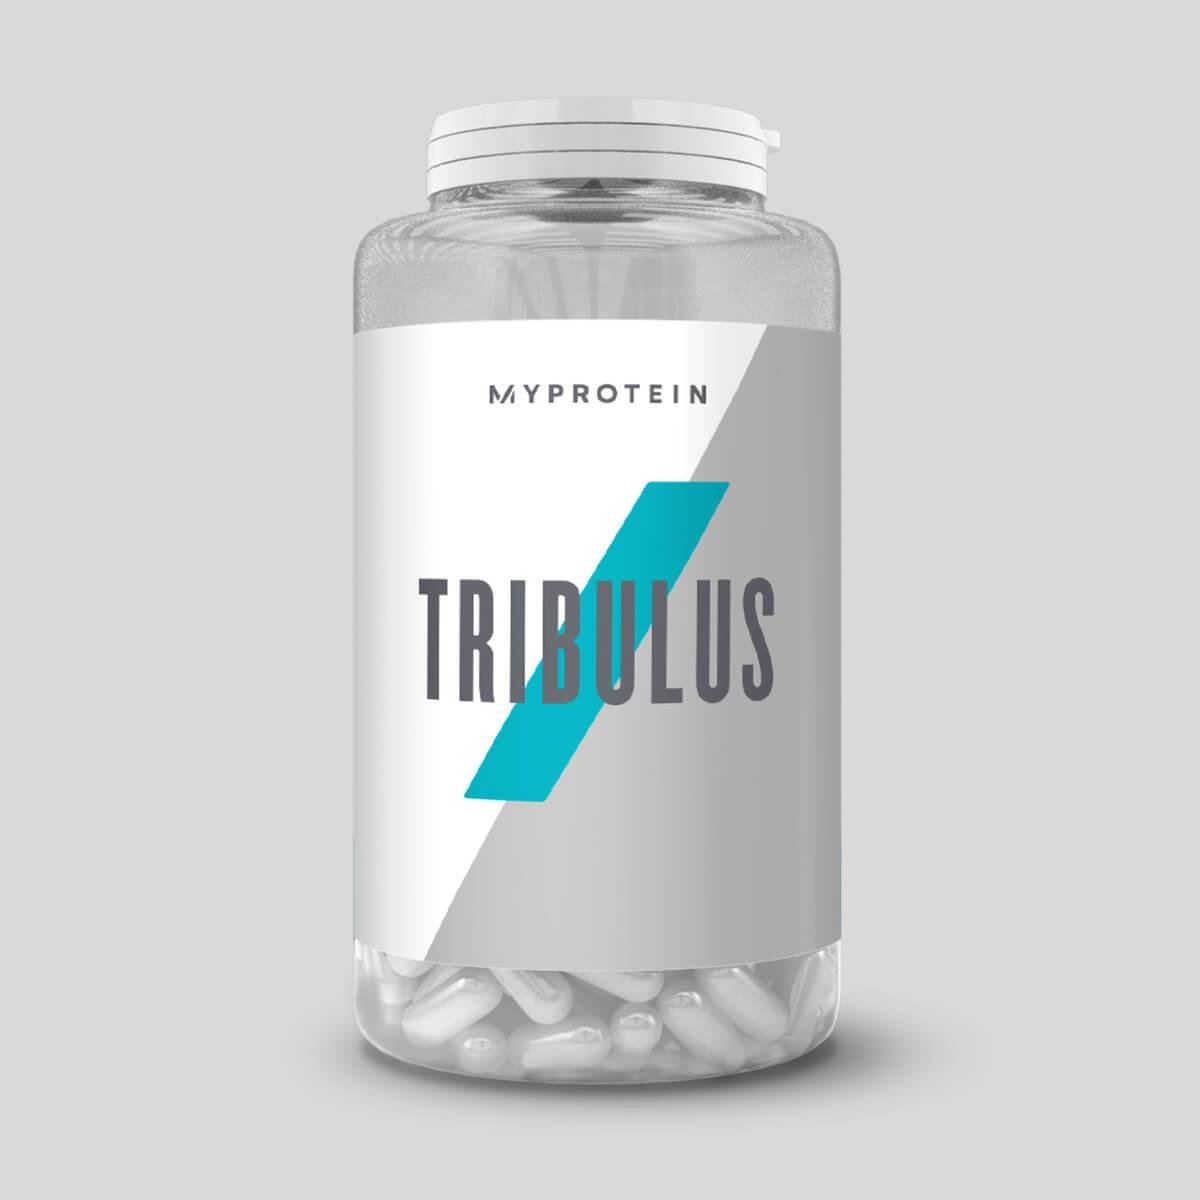 MyProtein Tribulus Pro (95% saponin) 270 caps,  мл, MyProtein. Бустер тестостерона. Поддержание здоровья Повышение либидо Aнаболические свойства Повышение тестостерона 